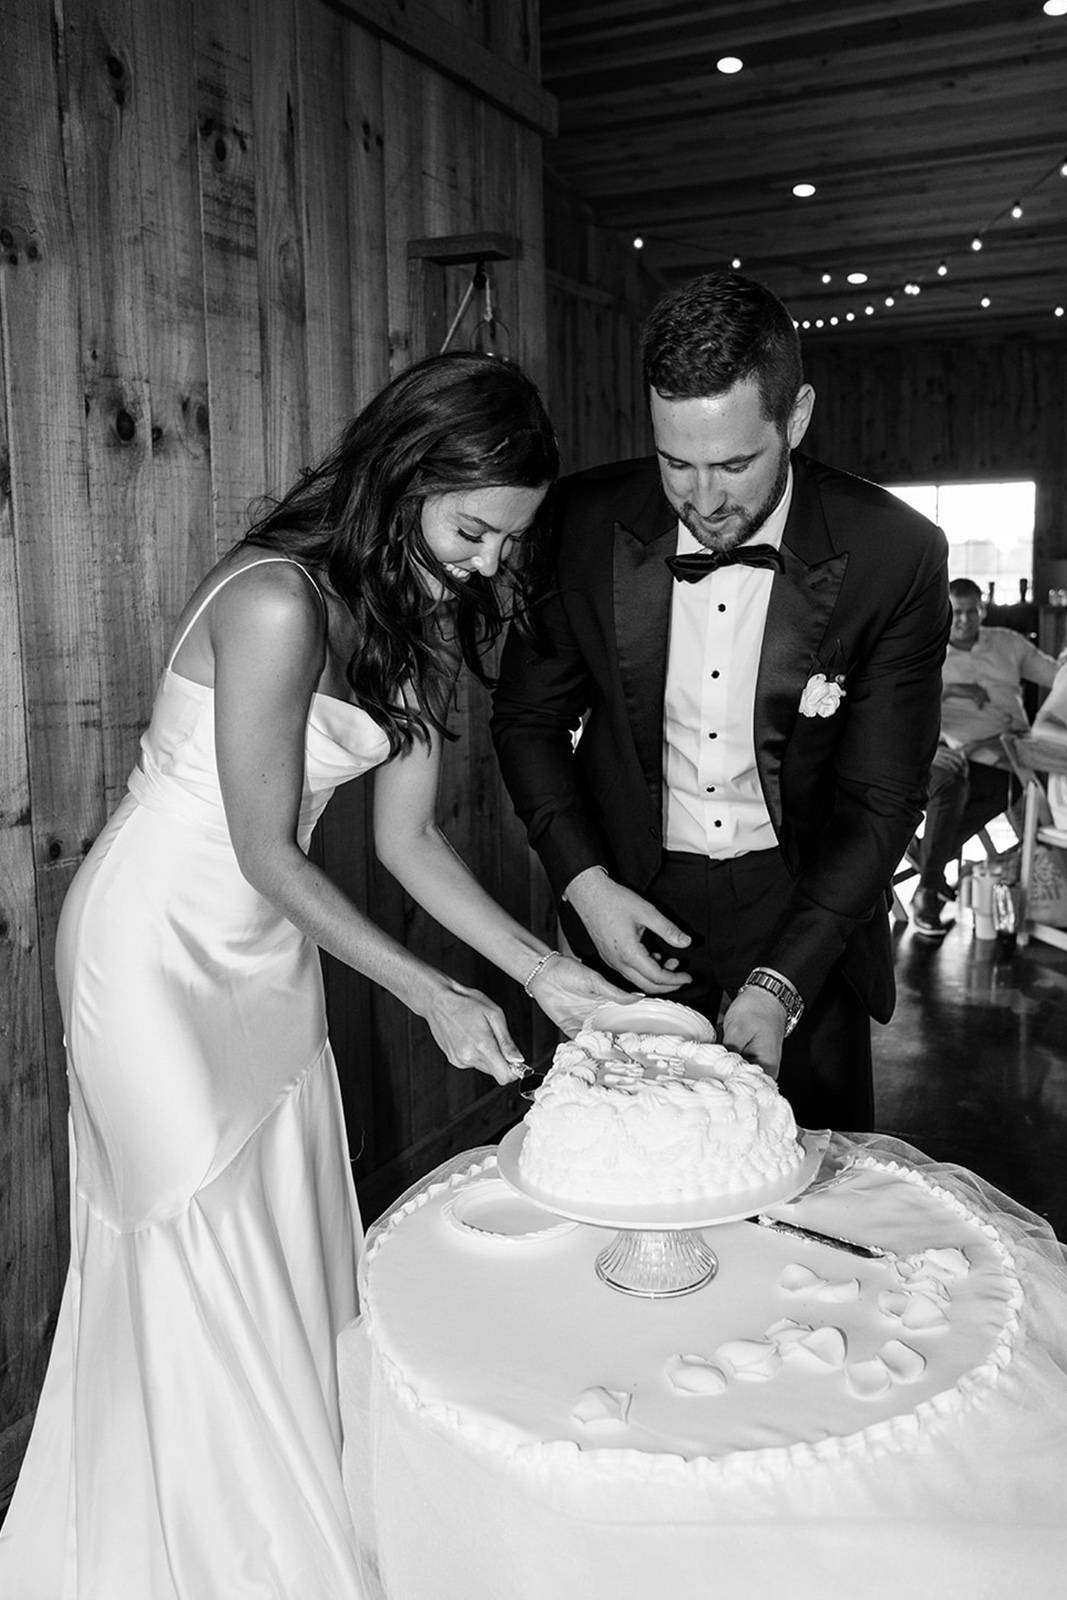 Bride and groom, cutting their wedding cake